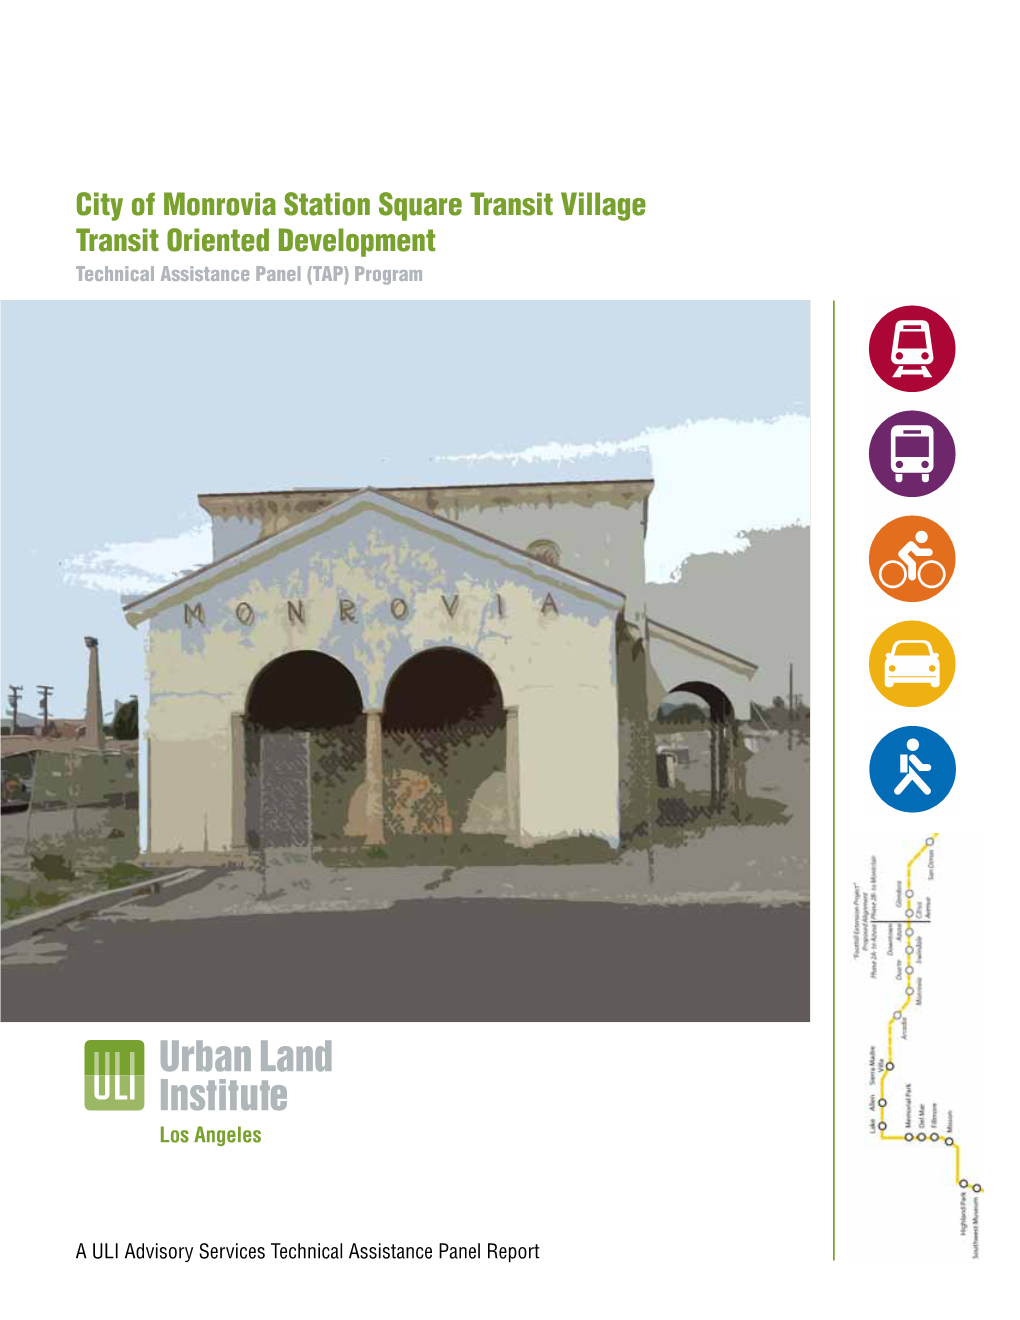 City of Monrovia Station Square Transit Village Transit Oriented Development Technical Assistance Panel (TAP) Program